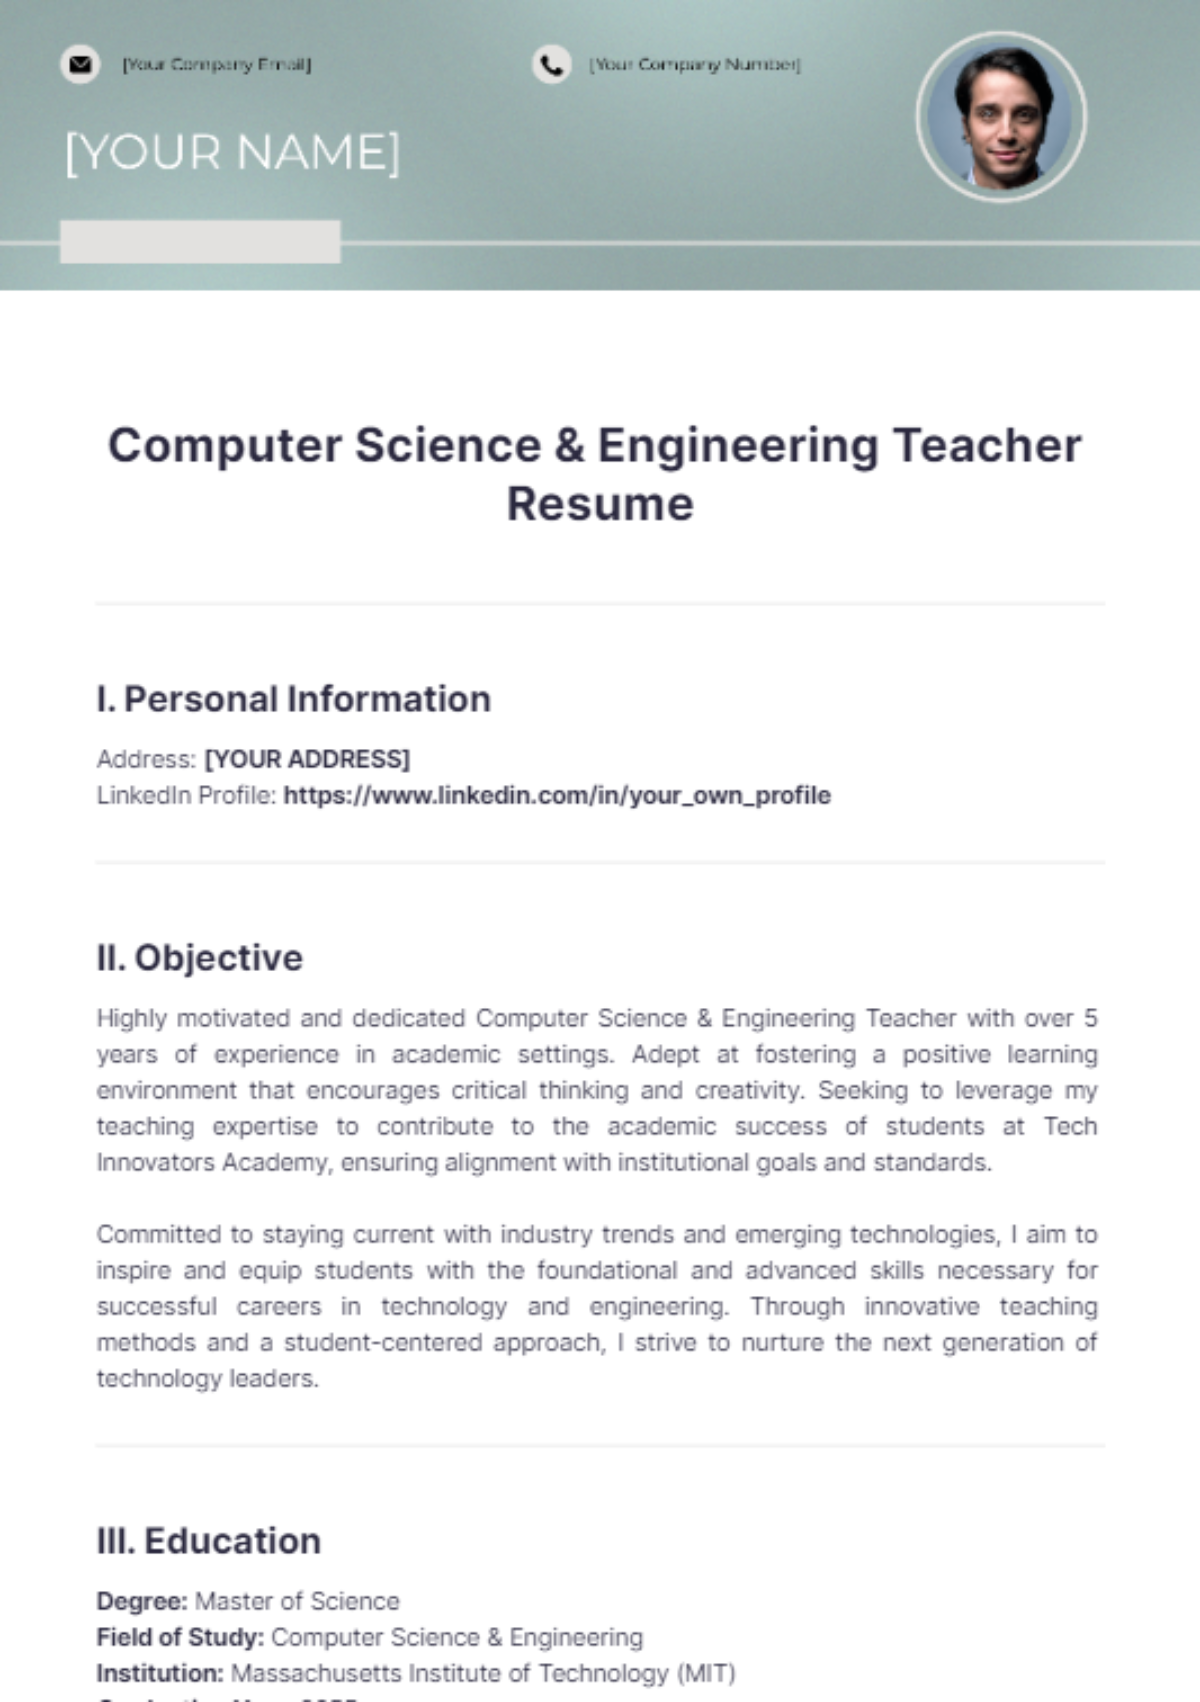 Free Computer Science & Engineering Teacher Resume